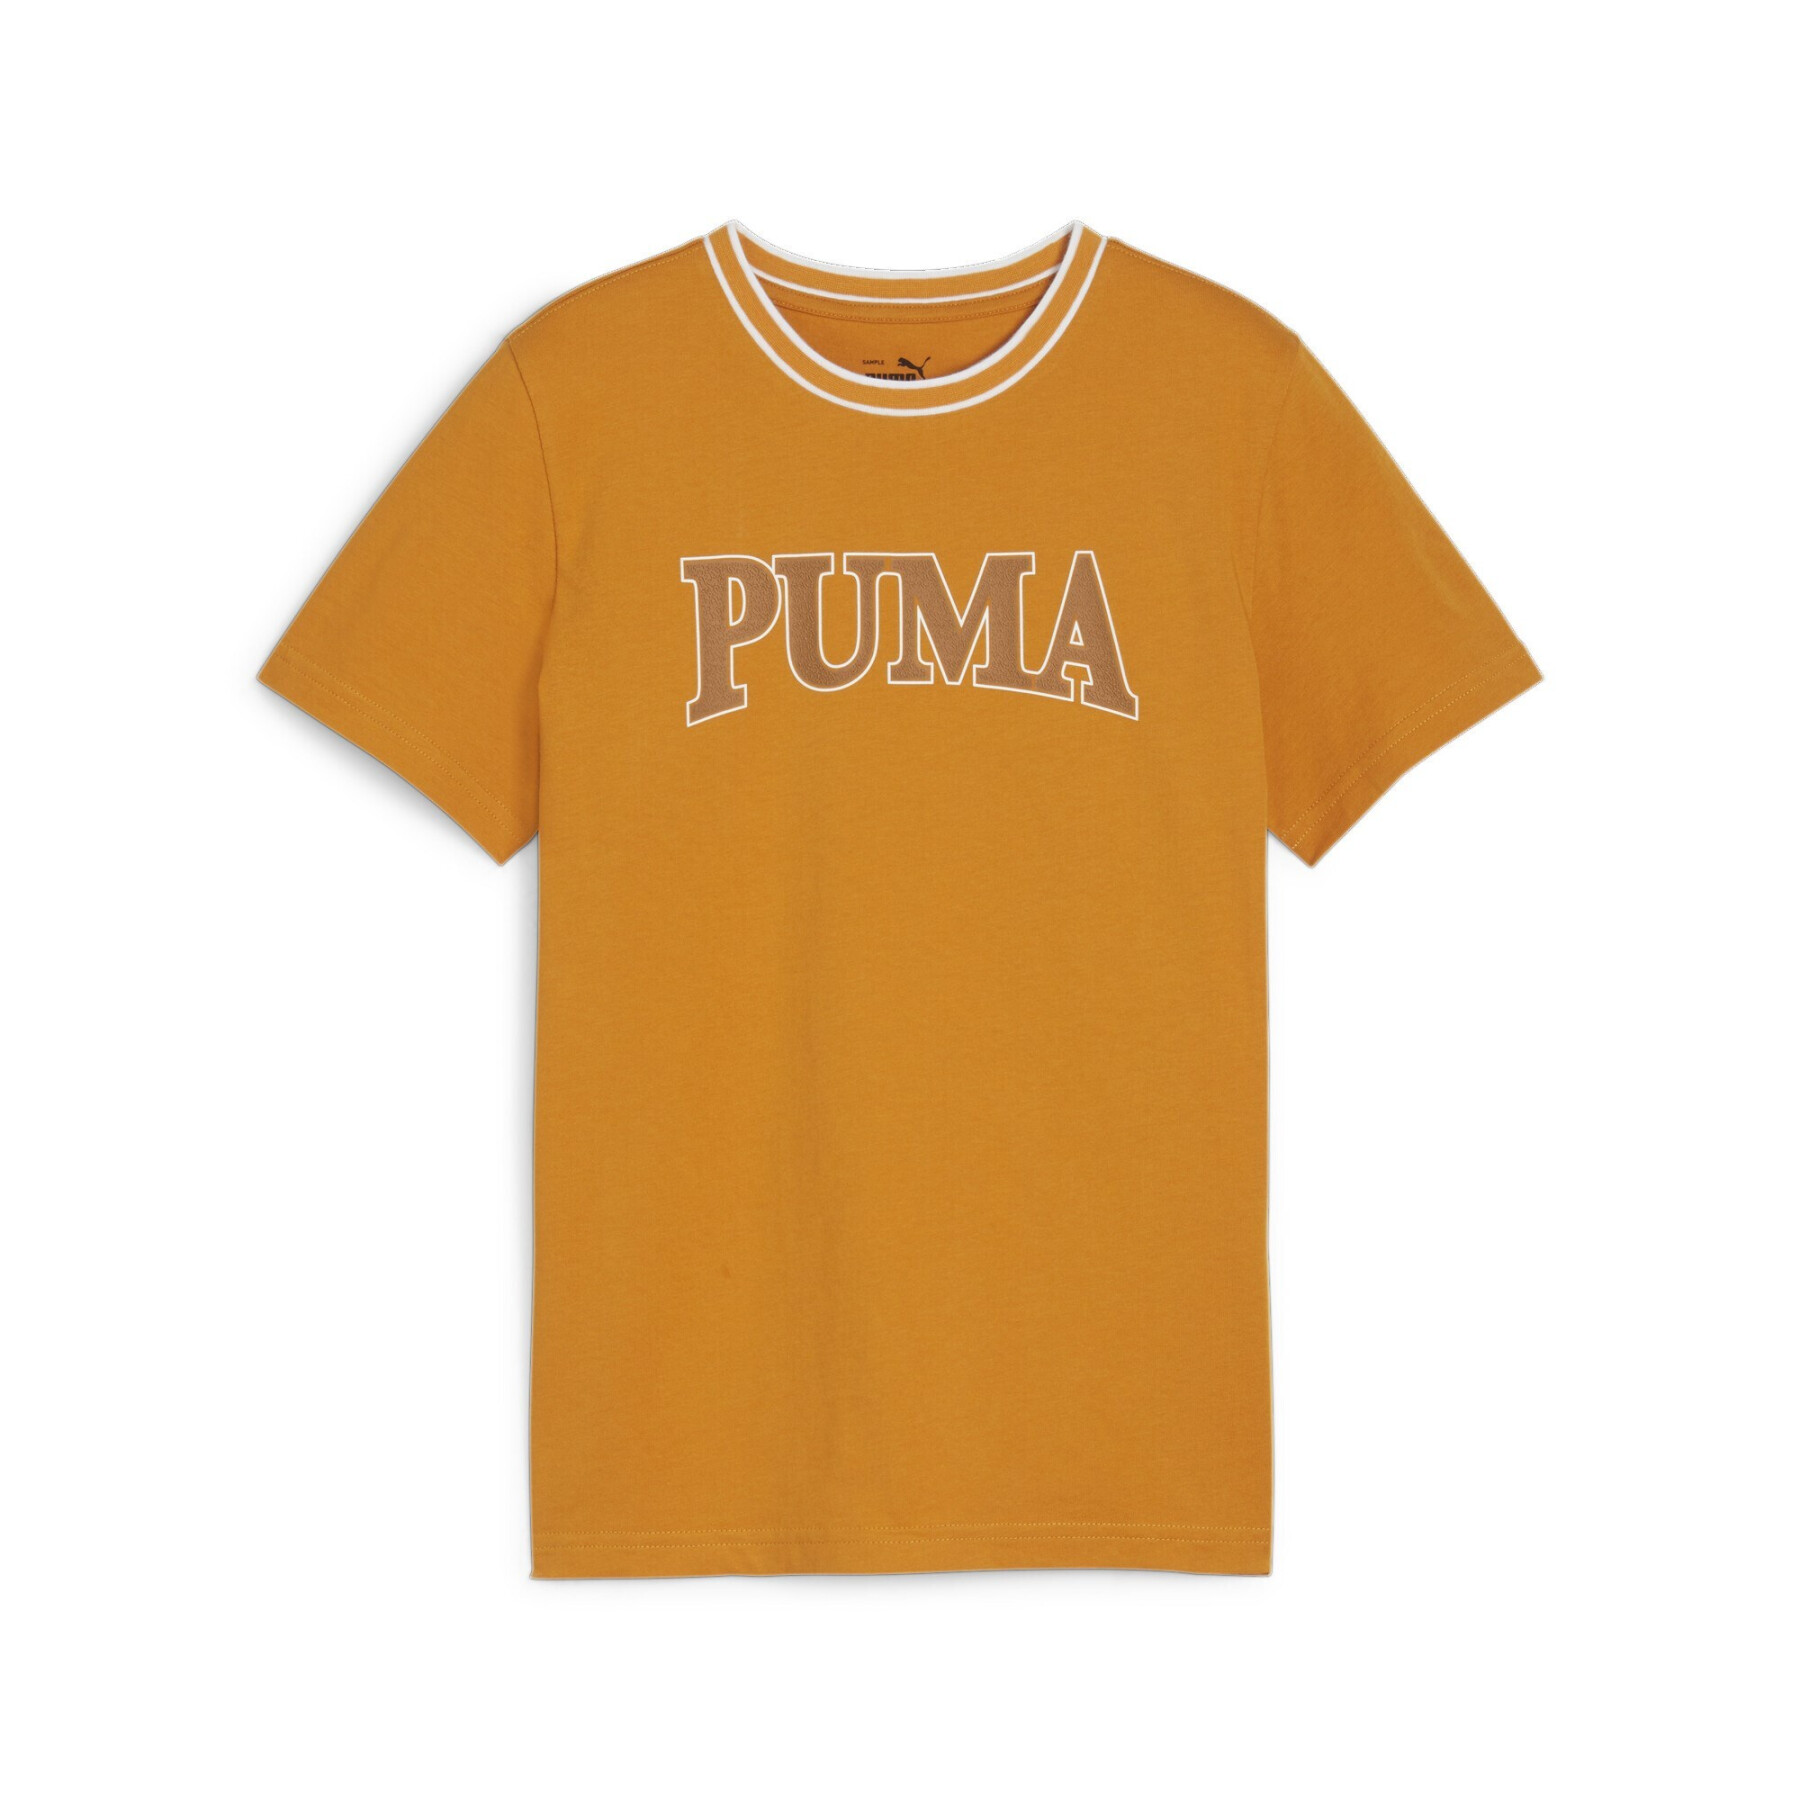 T-shirt  per bambini Puma Squad